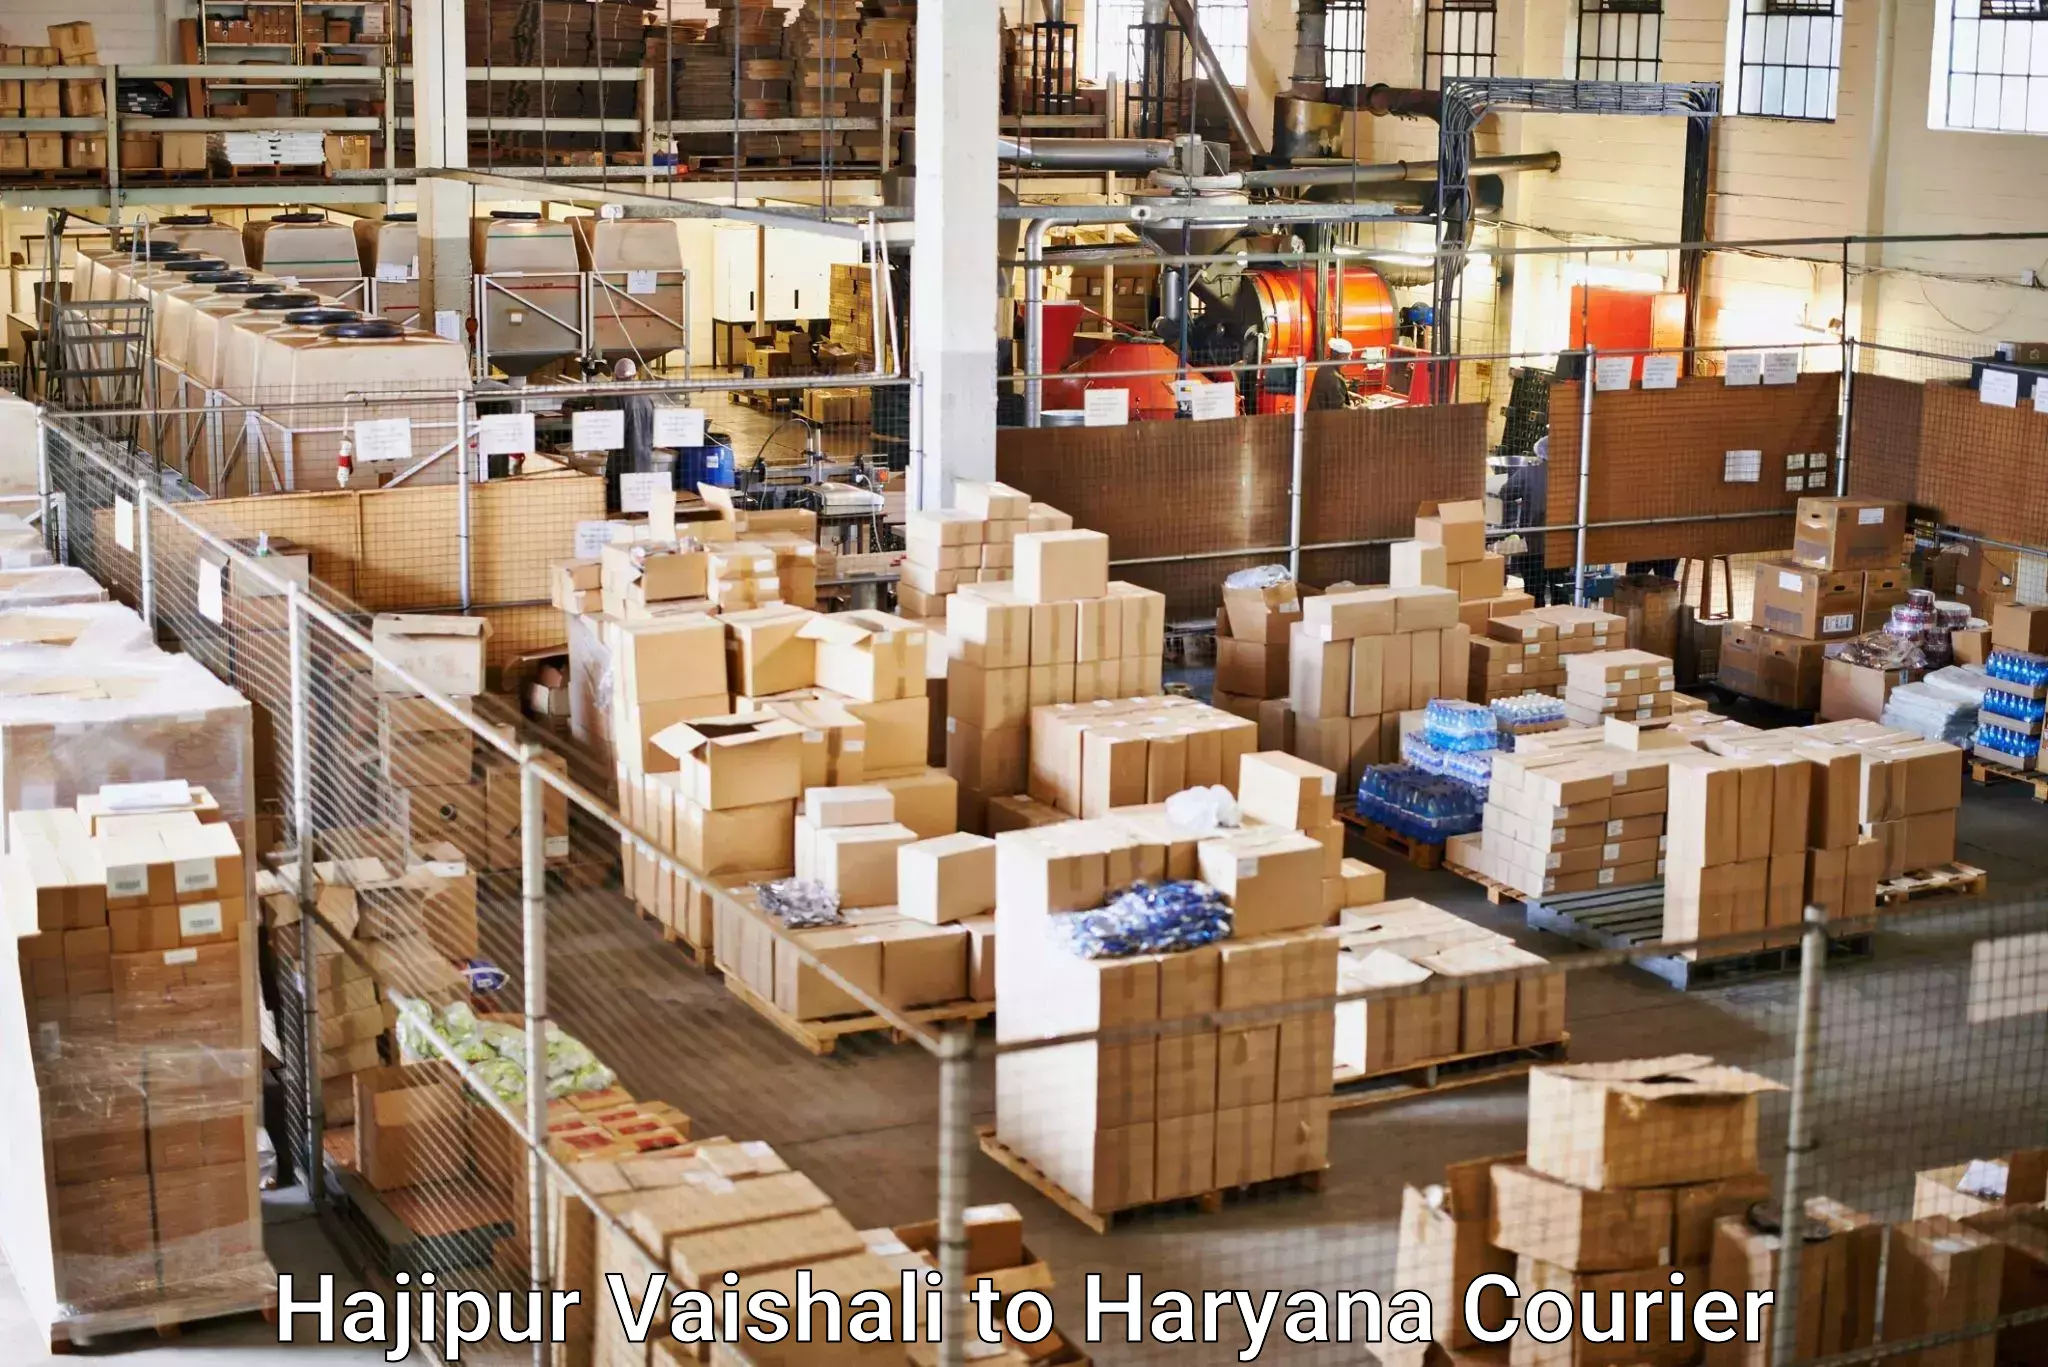 Courier service innovation Hajipur Vaishali to Mandi Dabwali